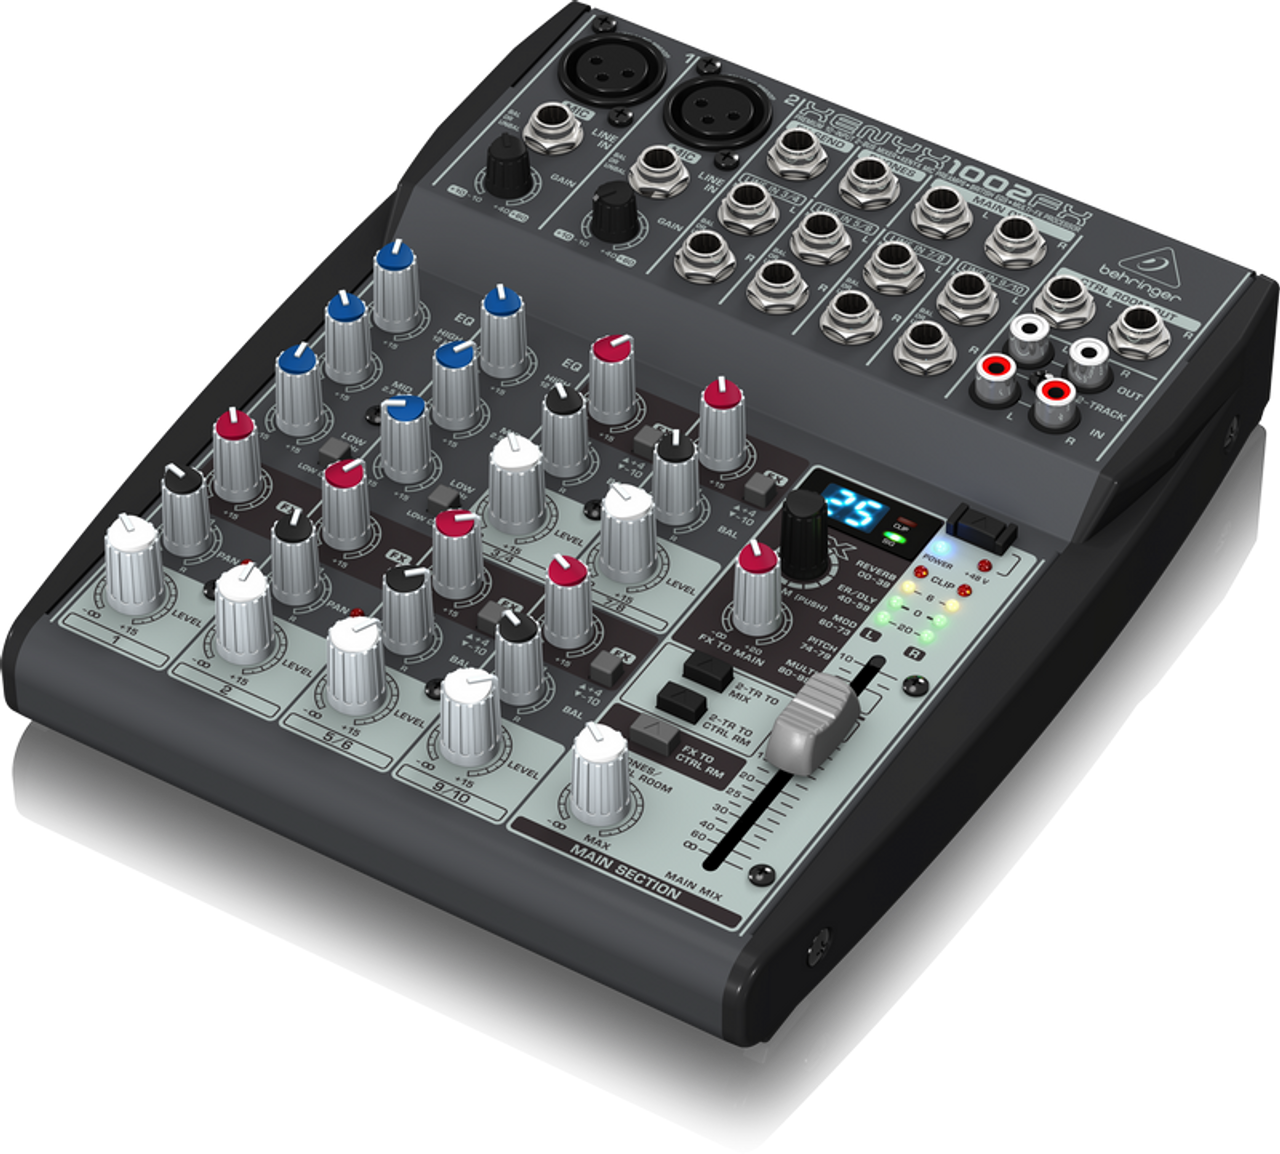 Pro Audio - Mixers - Personal mixer - NLFX Professional